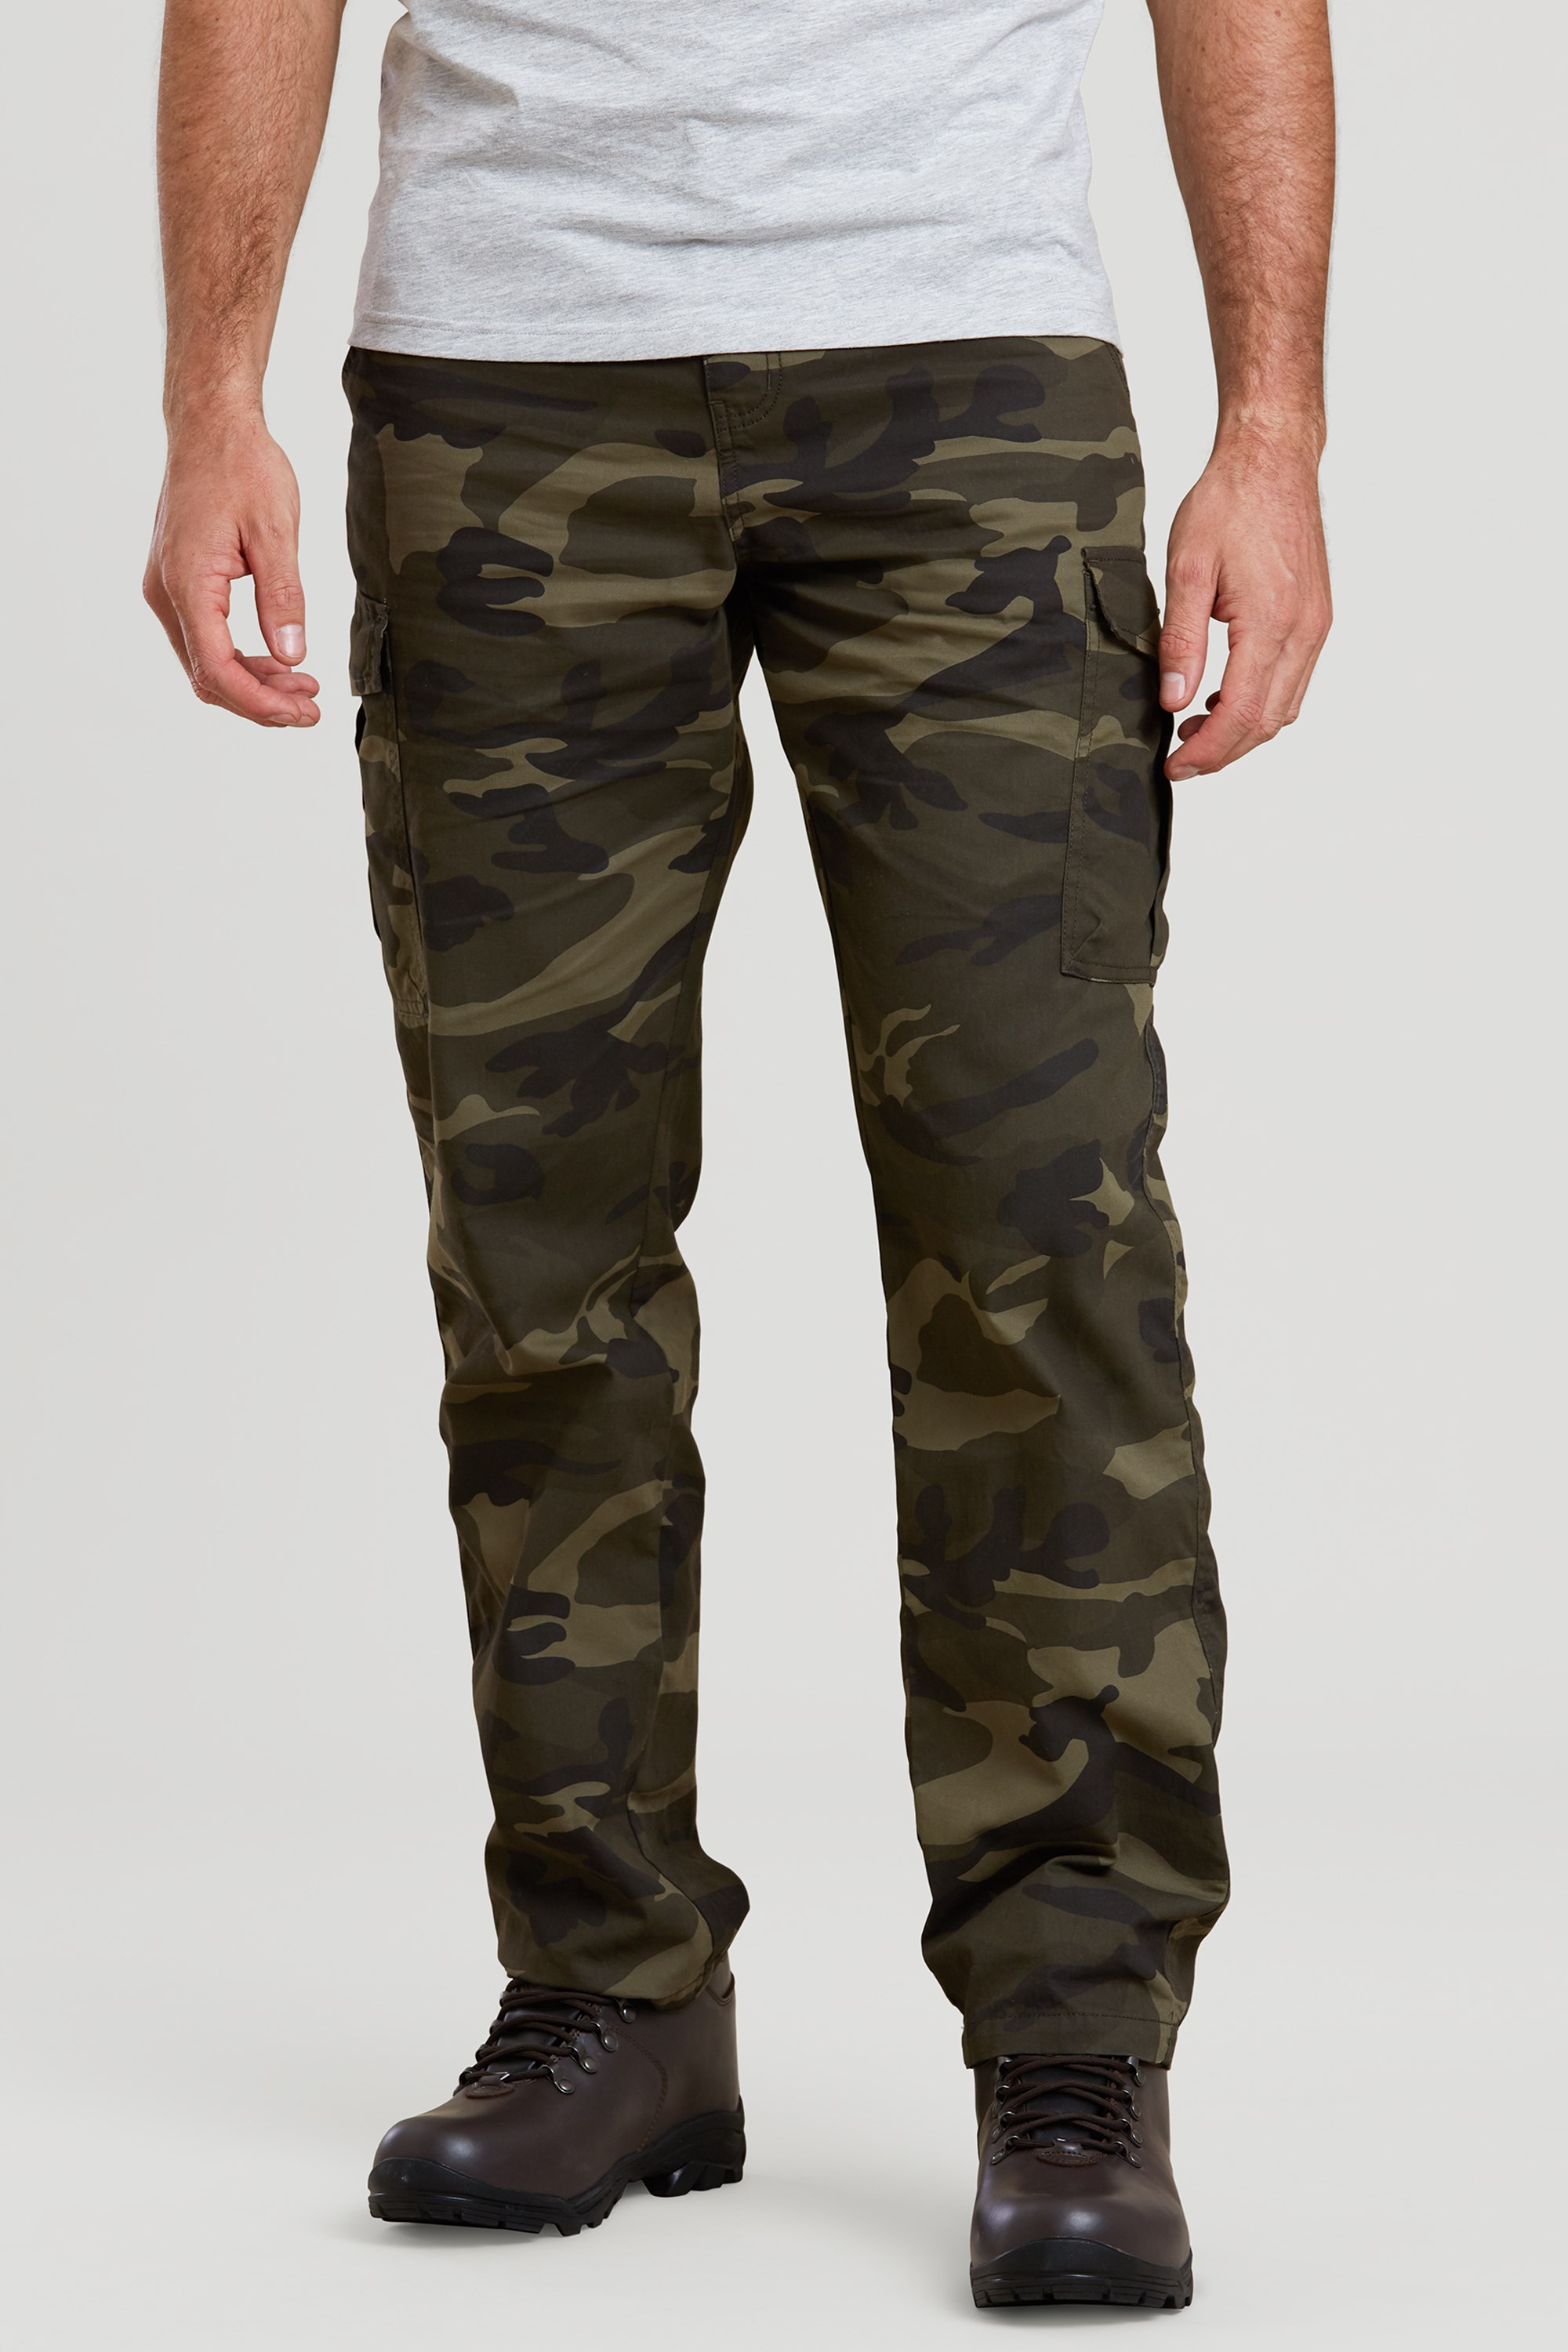 camouflage cargo pants men